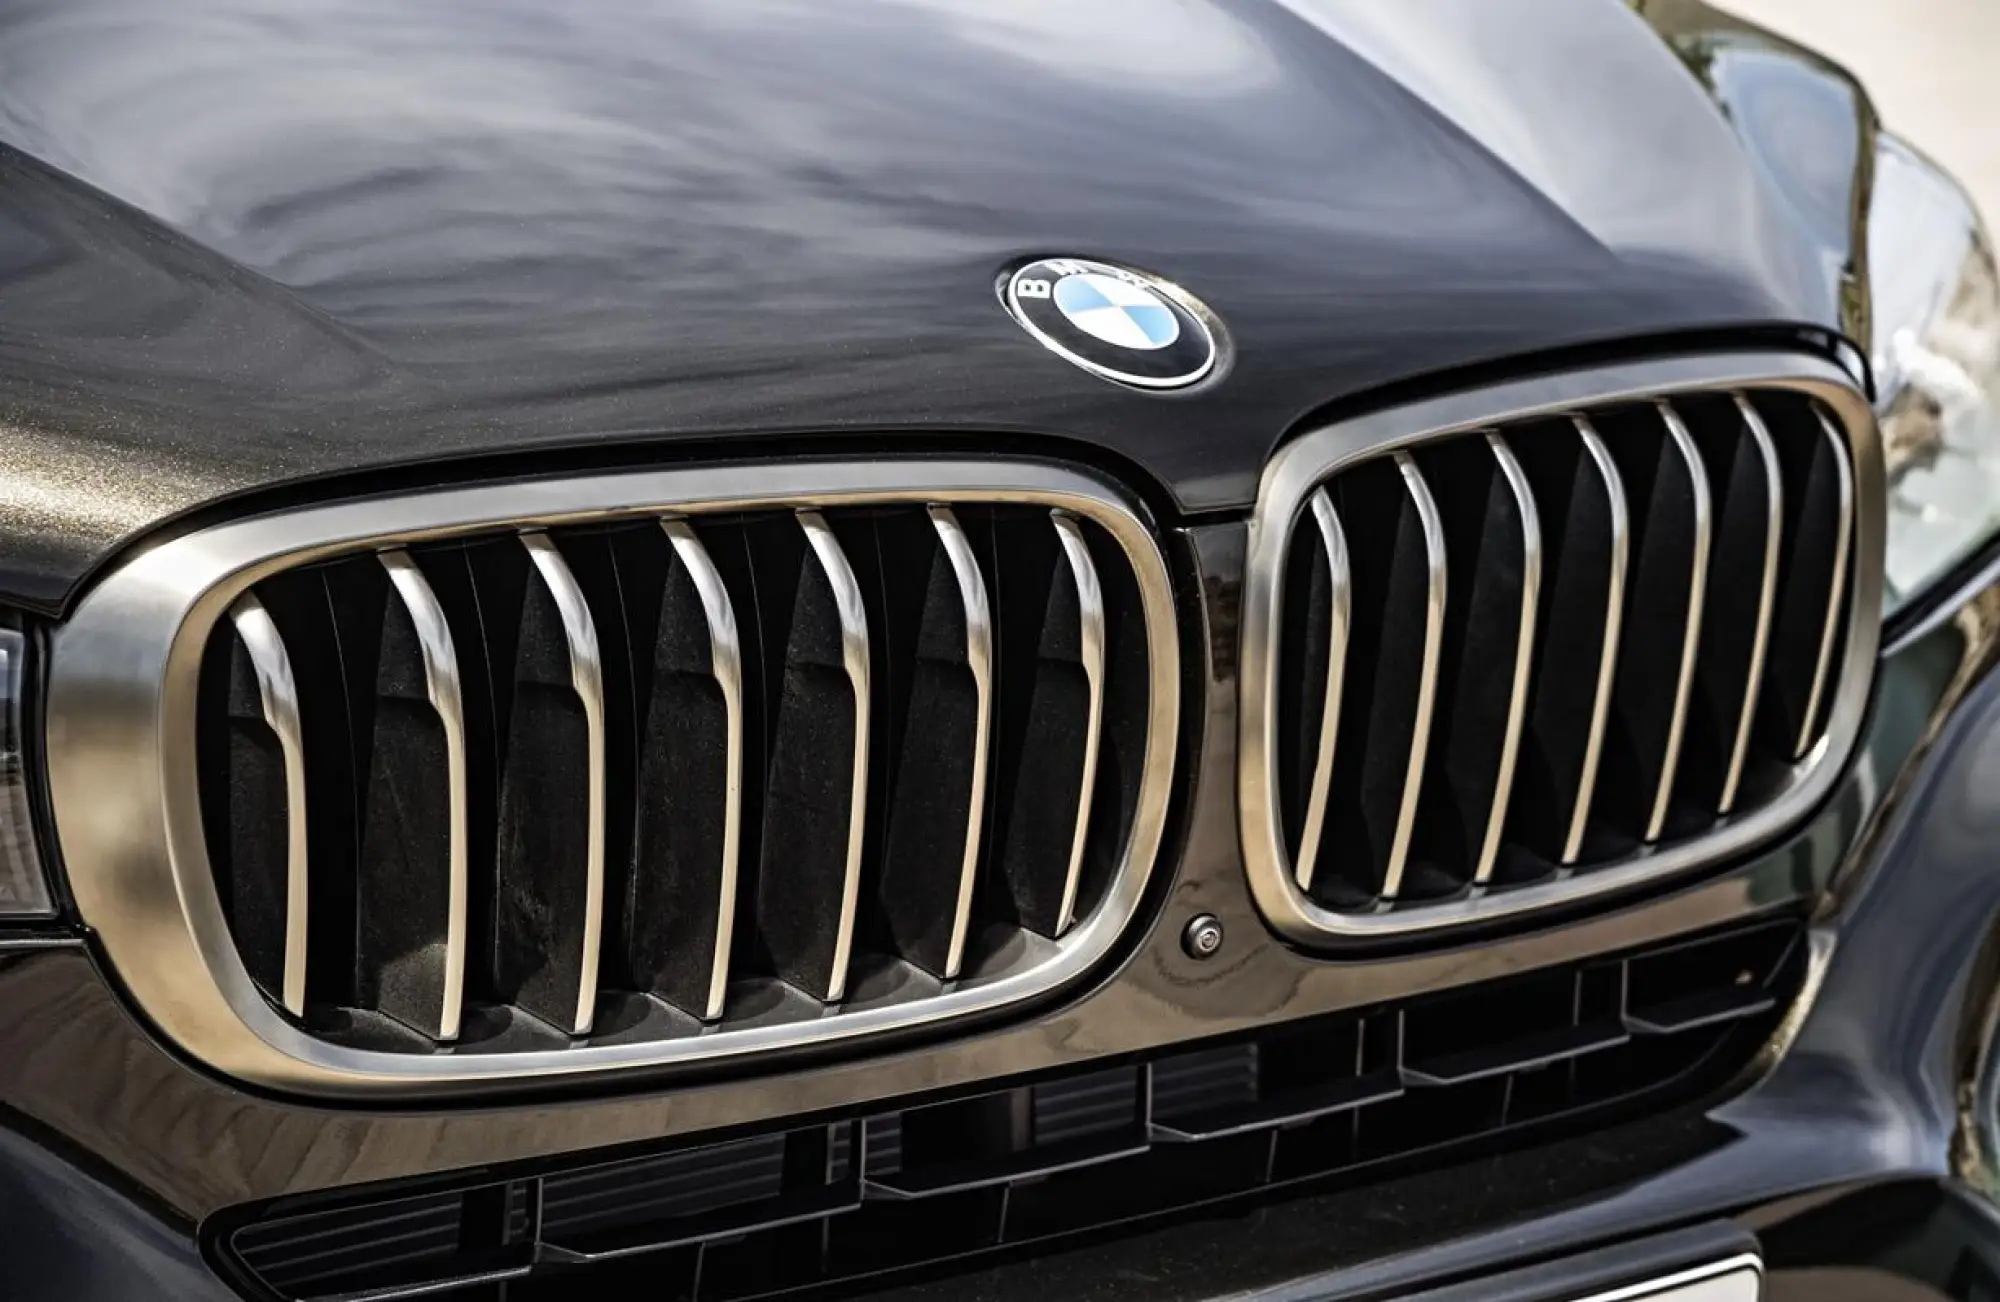 BMW X6 MY 2015 - Foto ufficiali - 76